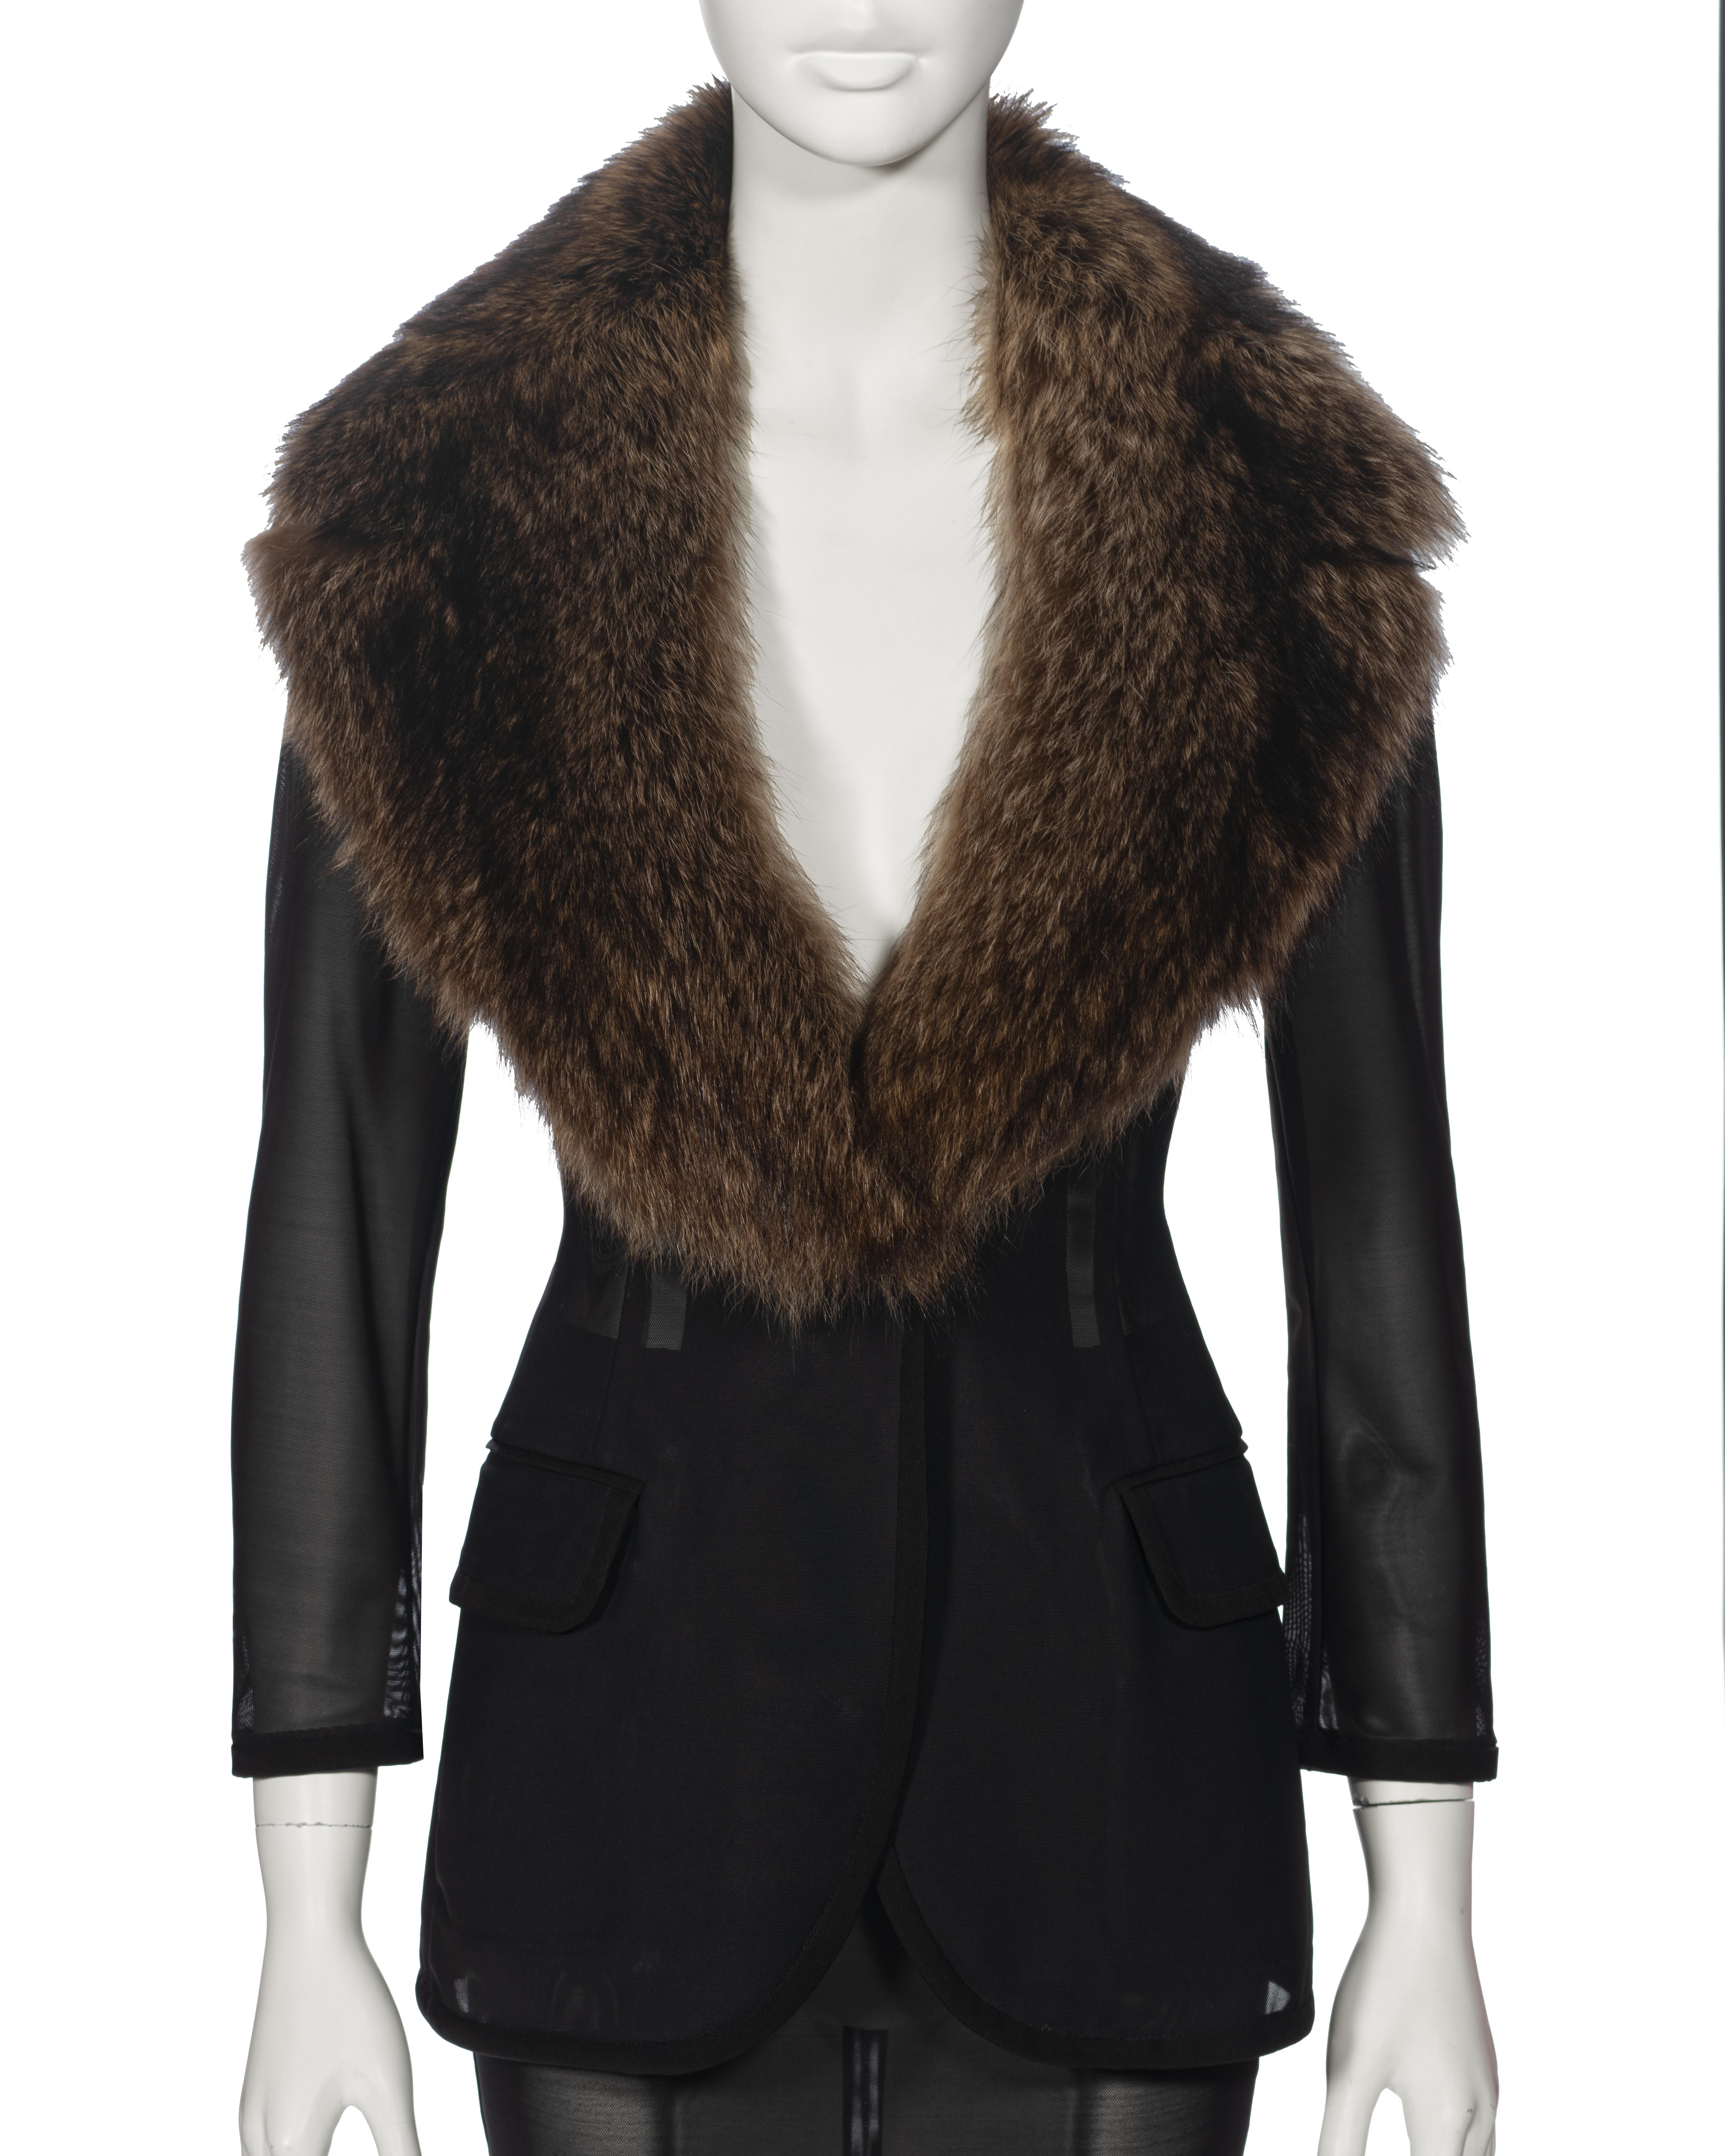 Women's Dolce & Gabbana Black Power Net Skirt Suit with Fur Collar, fw 1995